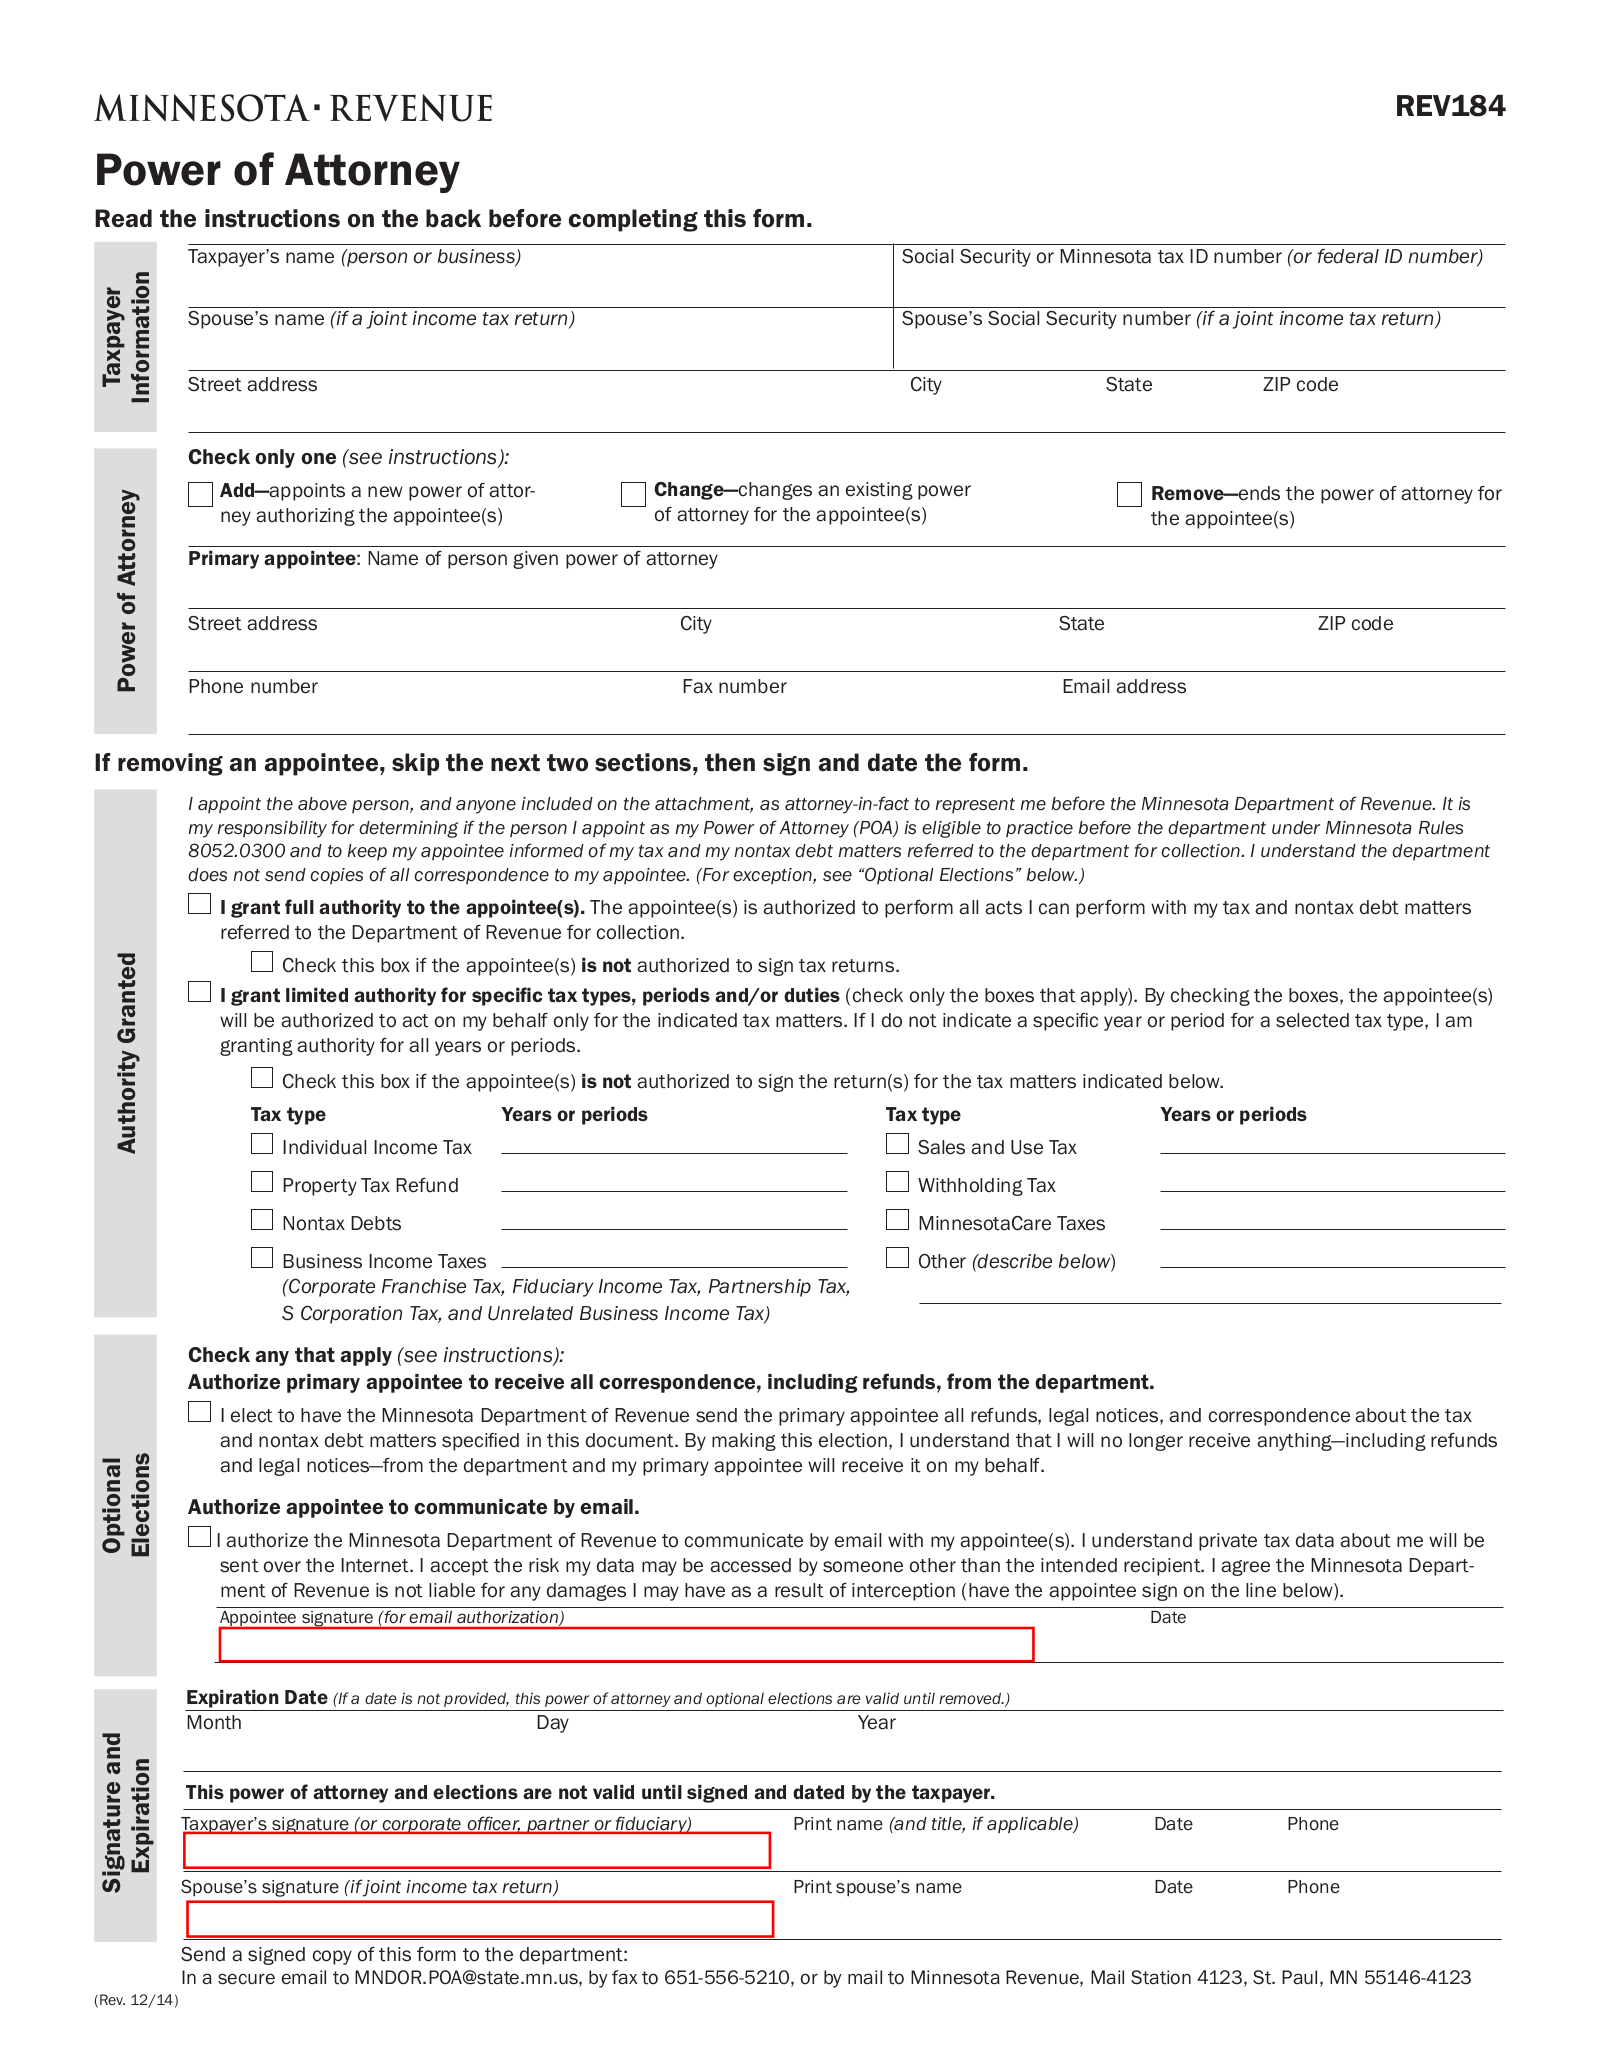 Minnesota Tax Power of Attorney Form (REV184)